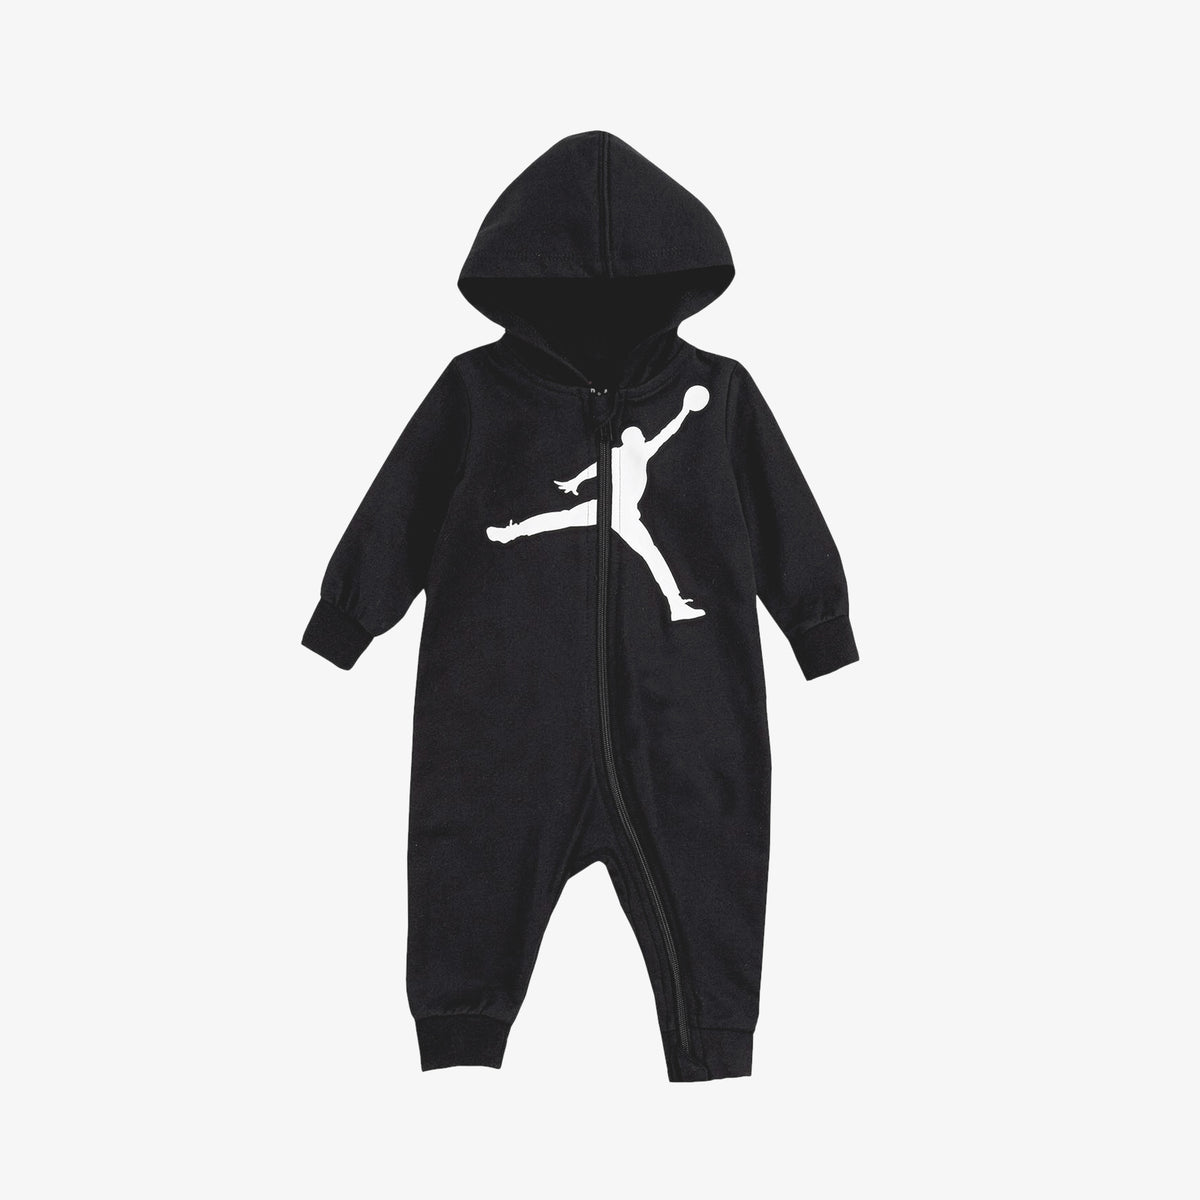 Jordan Jumpman Hooded Infant Coveralls - Black